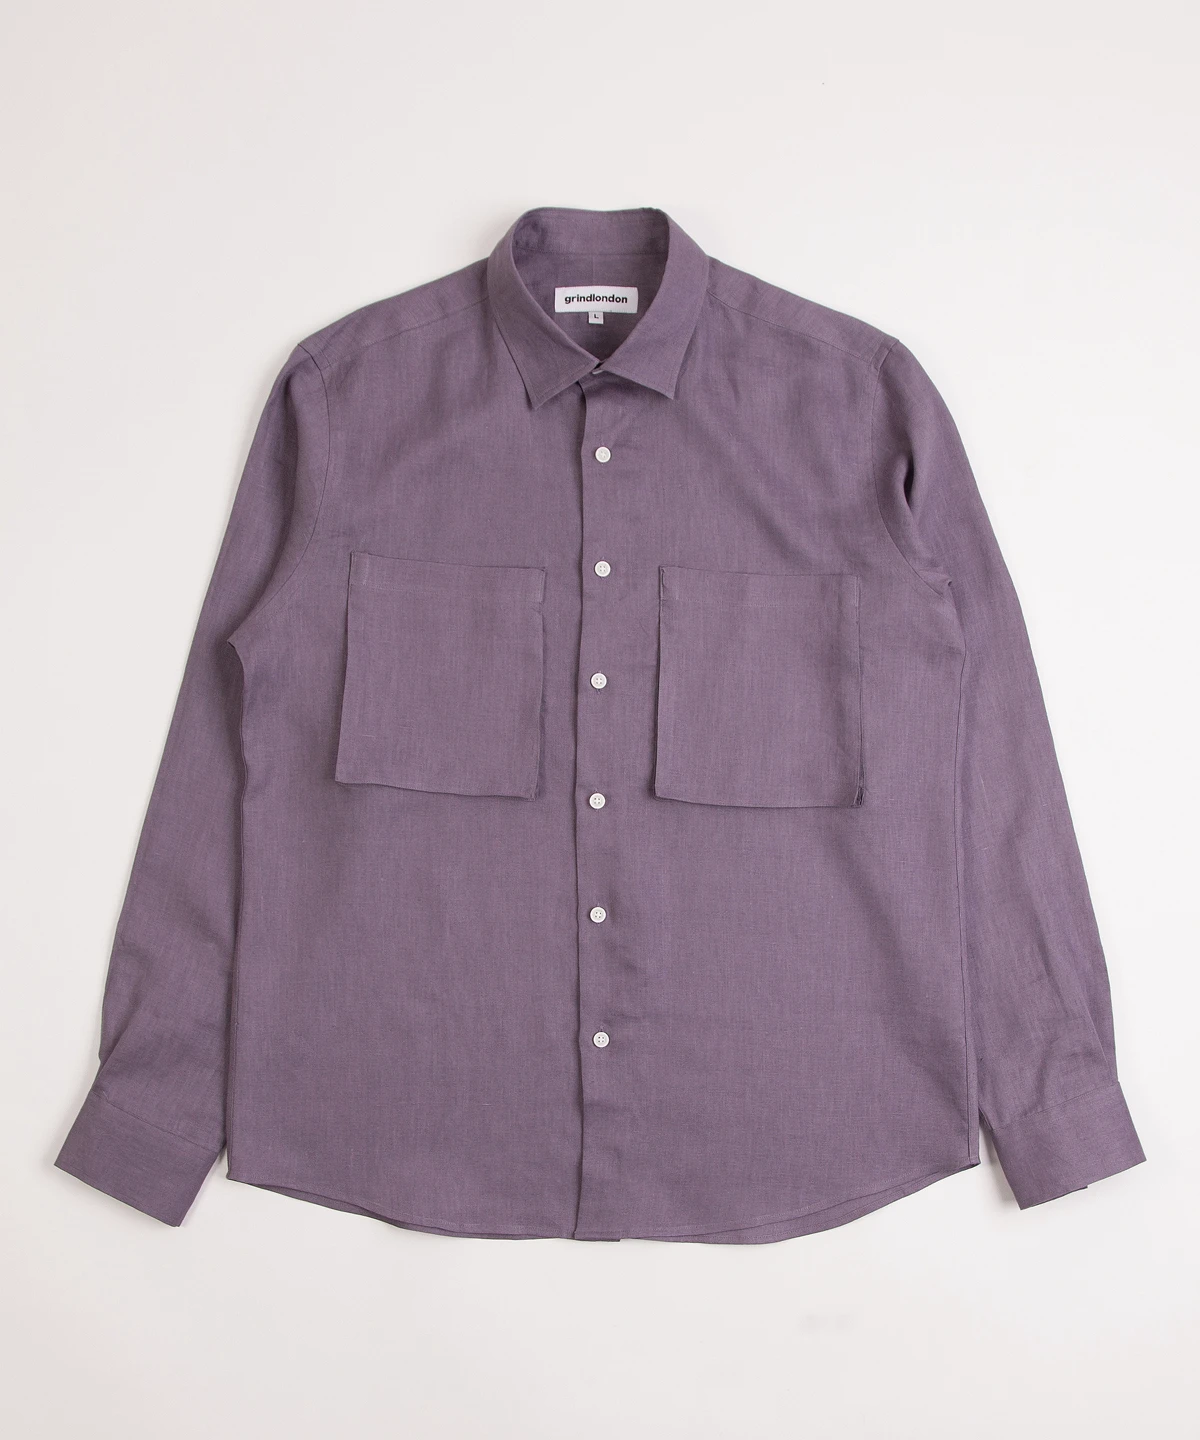 grindlondon linen long sleeve shirt old lavender